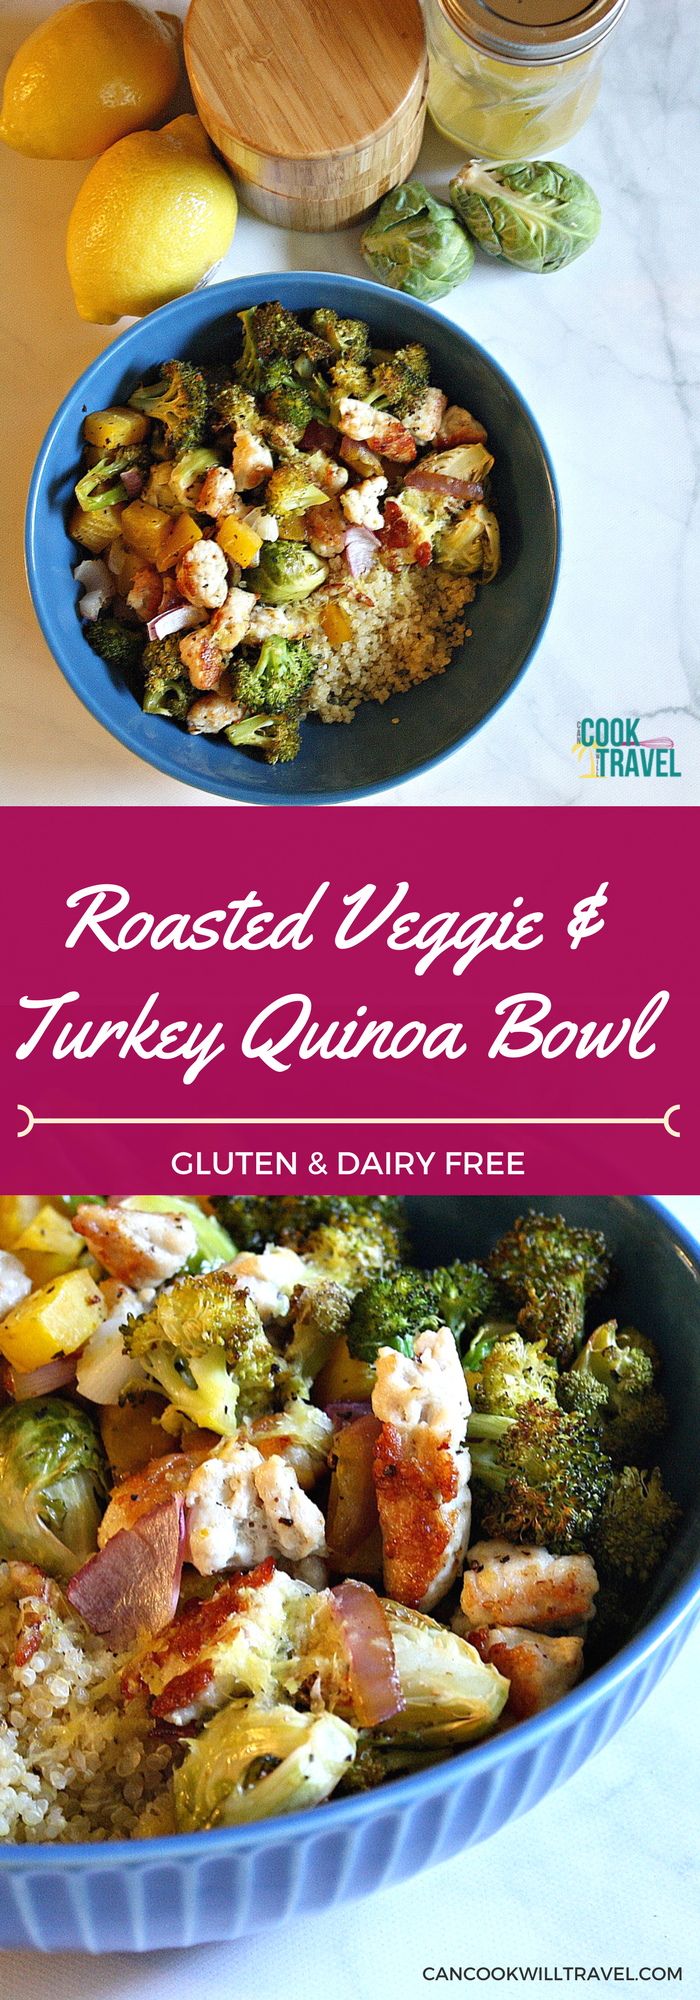 Roasted Veg & Turkey Quinoa Bowl_Collage1